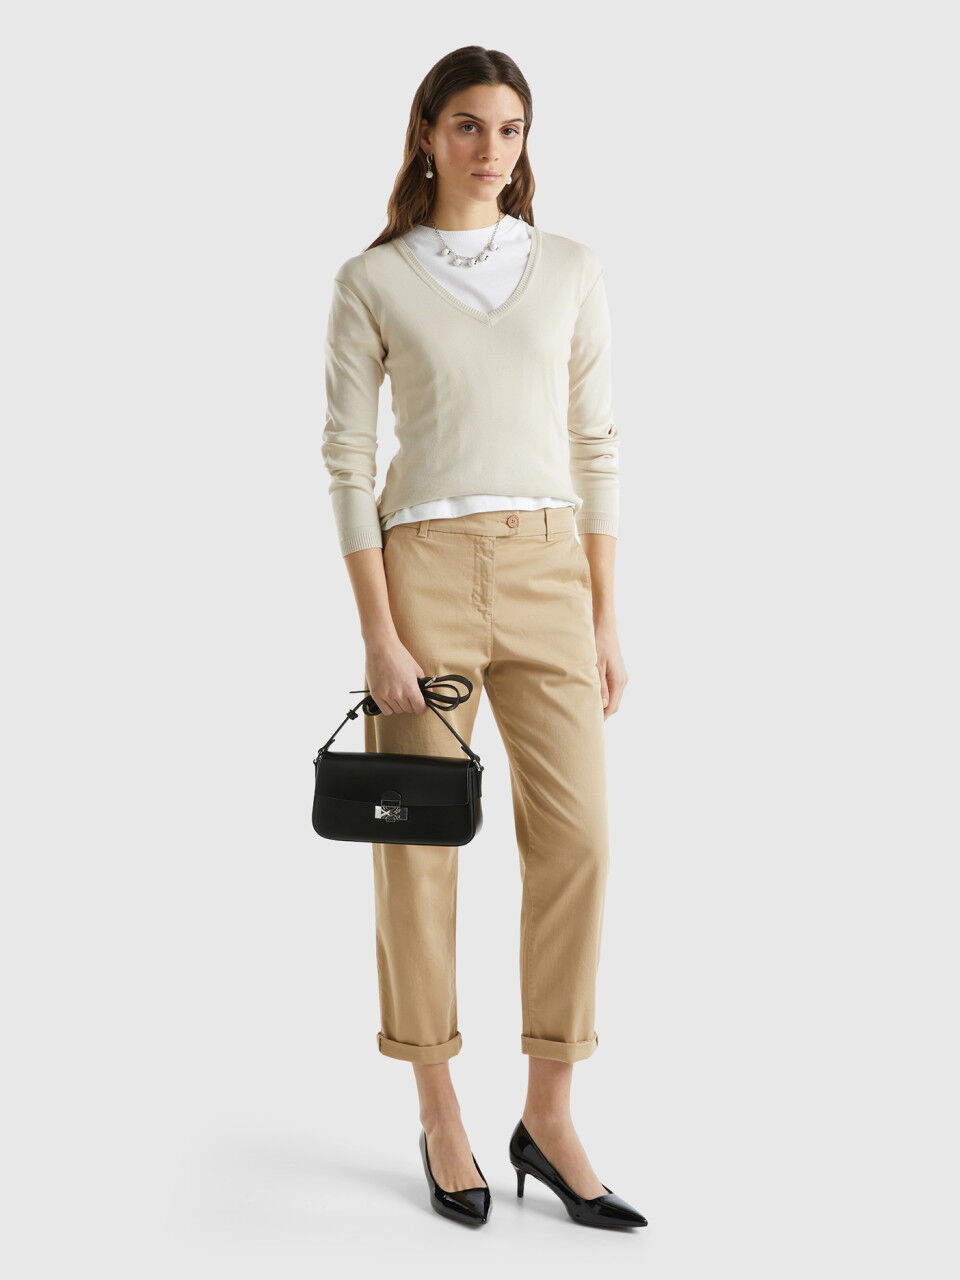 Women Office Business Straight Chino Pants High Waist Long Trousers Bottoms  NEW | eBay